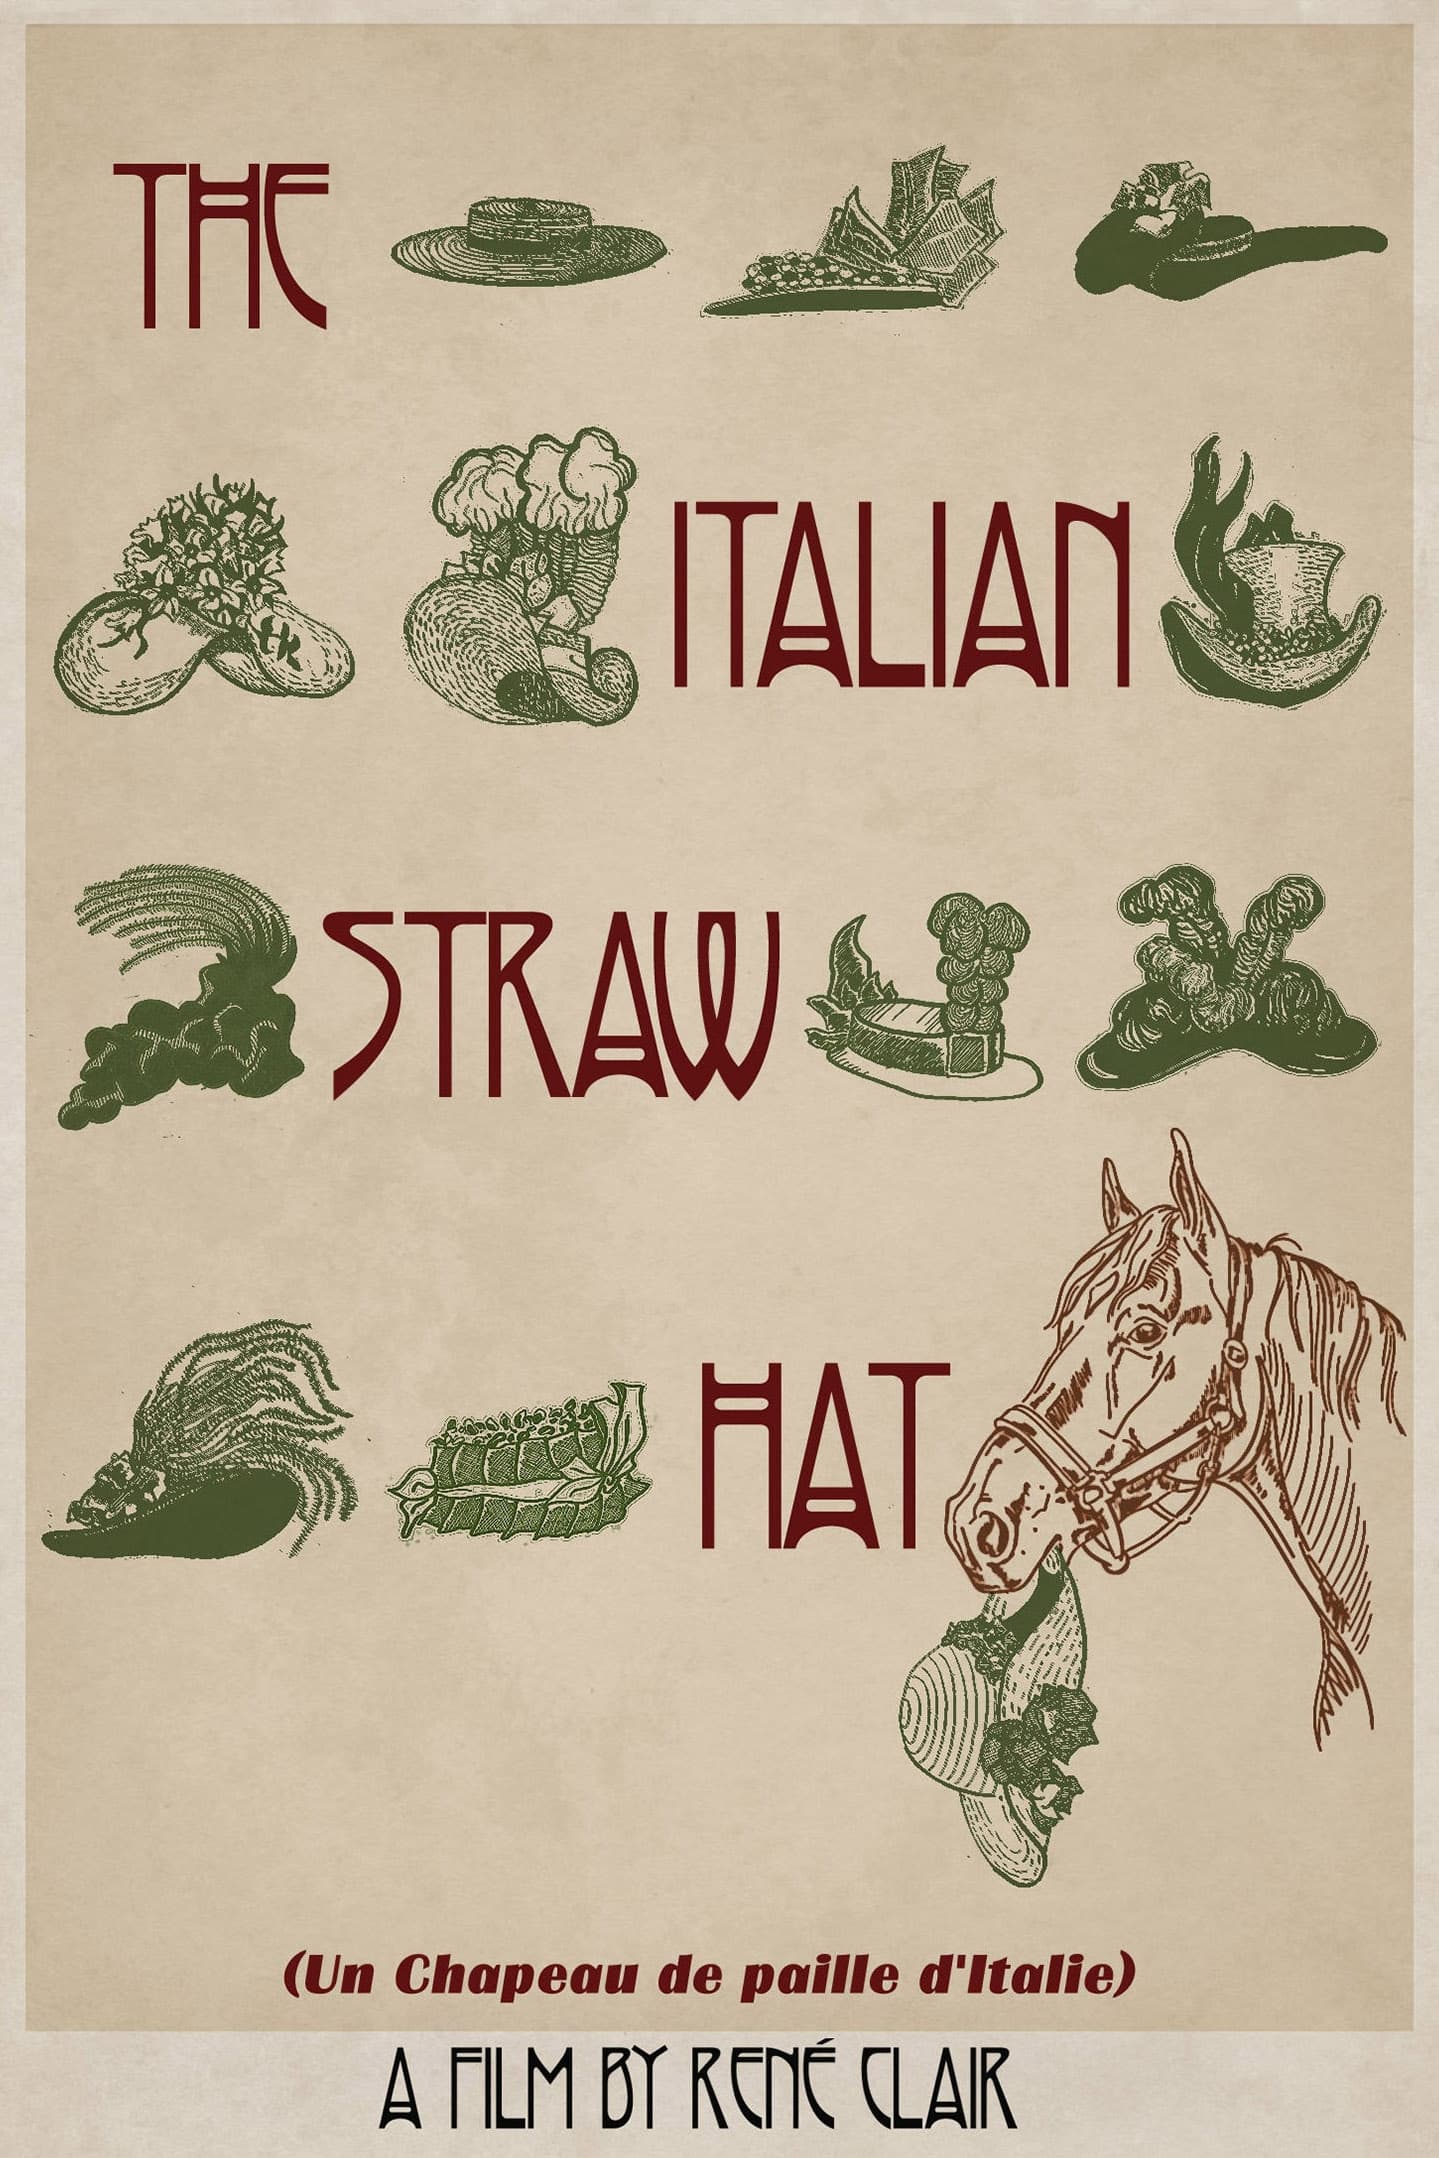 The Italian Straw Hat (1928)